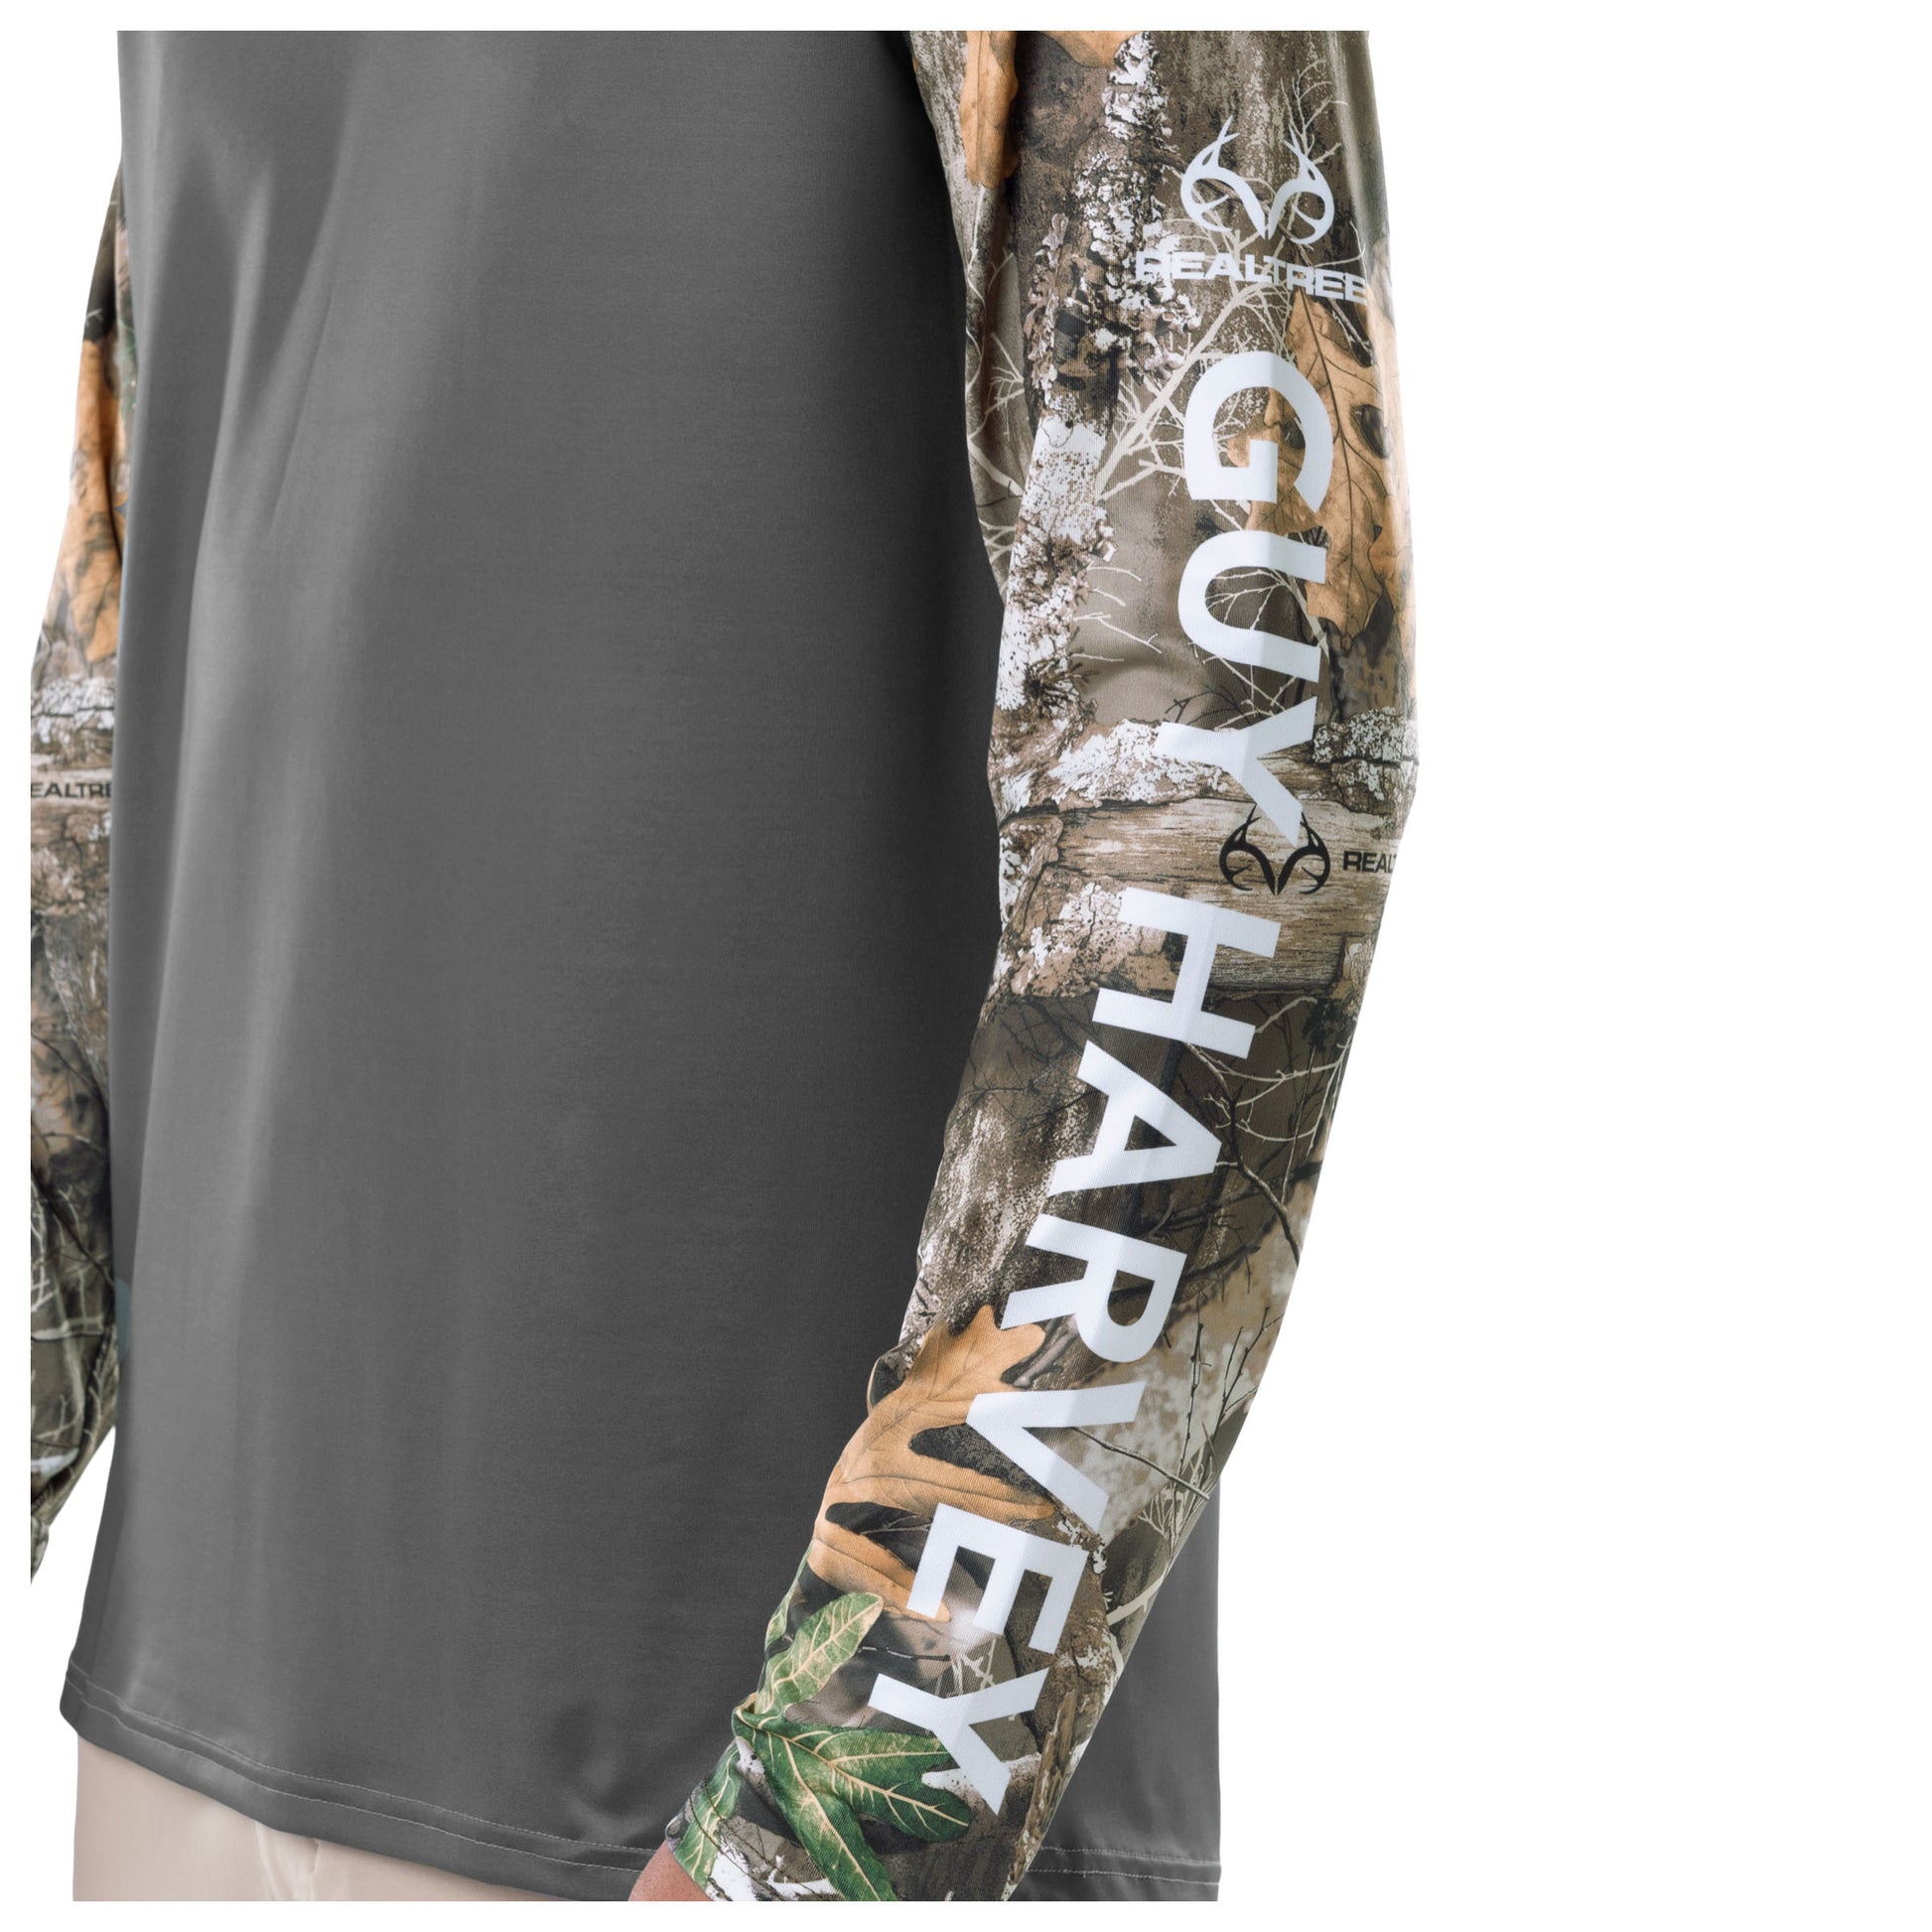 Guy Harvey Men's Long Sleeve Fishing Shirt Sun Protection UPF 50